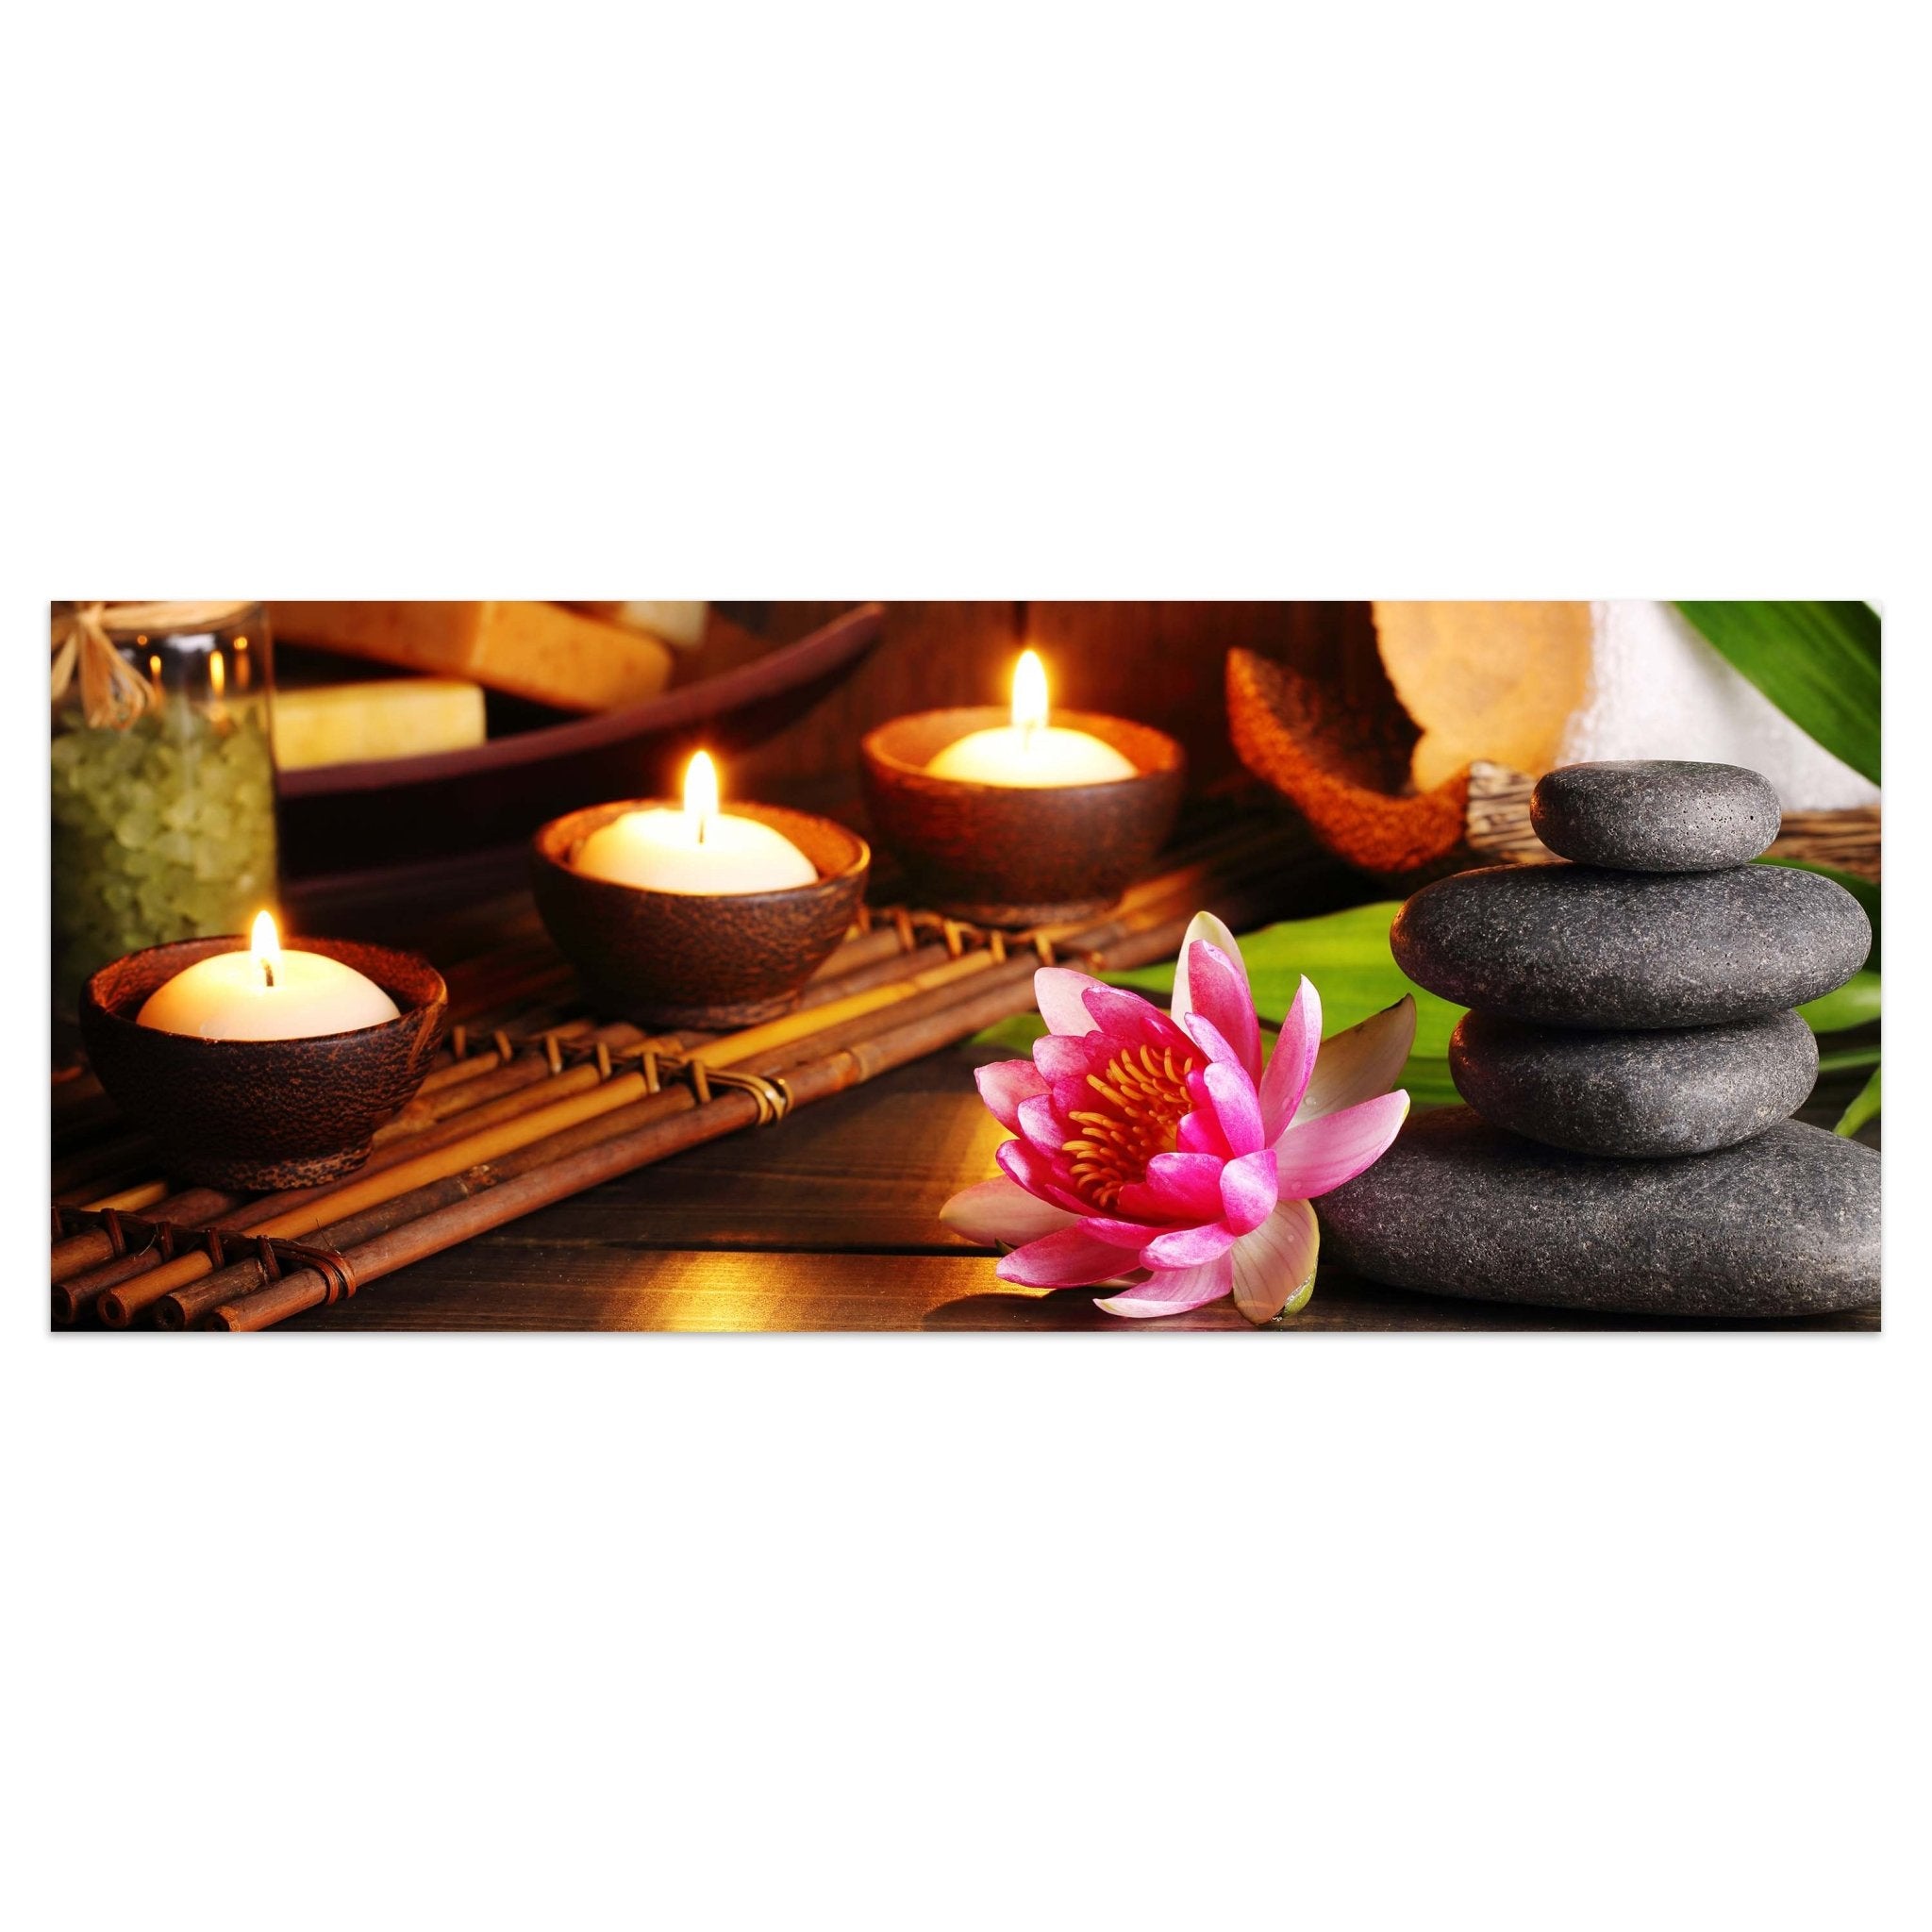 Leinwandbild Steine, Kerzen & Blüte, Lotus, Wellness M1100 kaufen - Bild 1